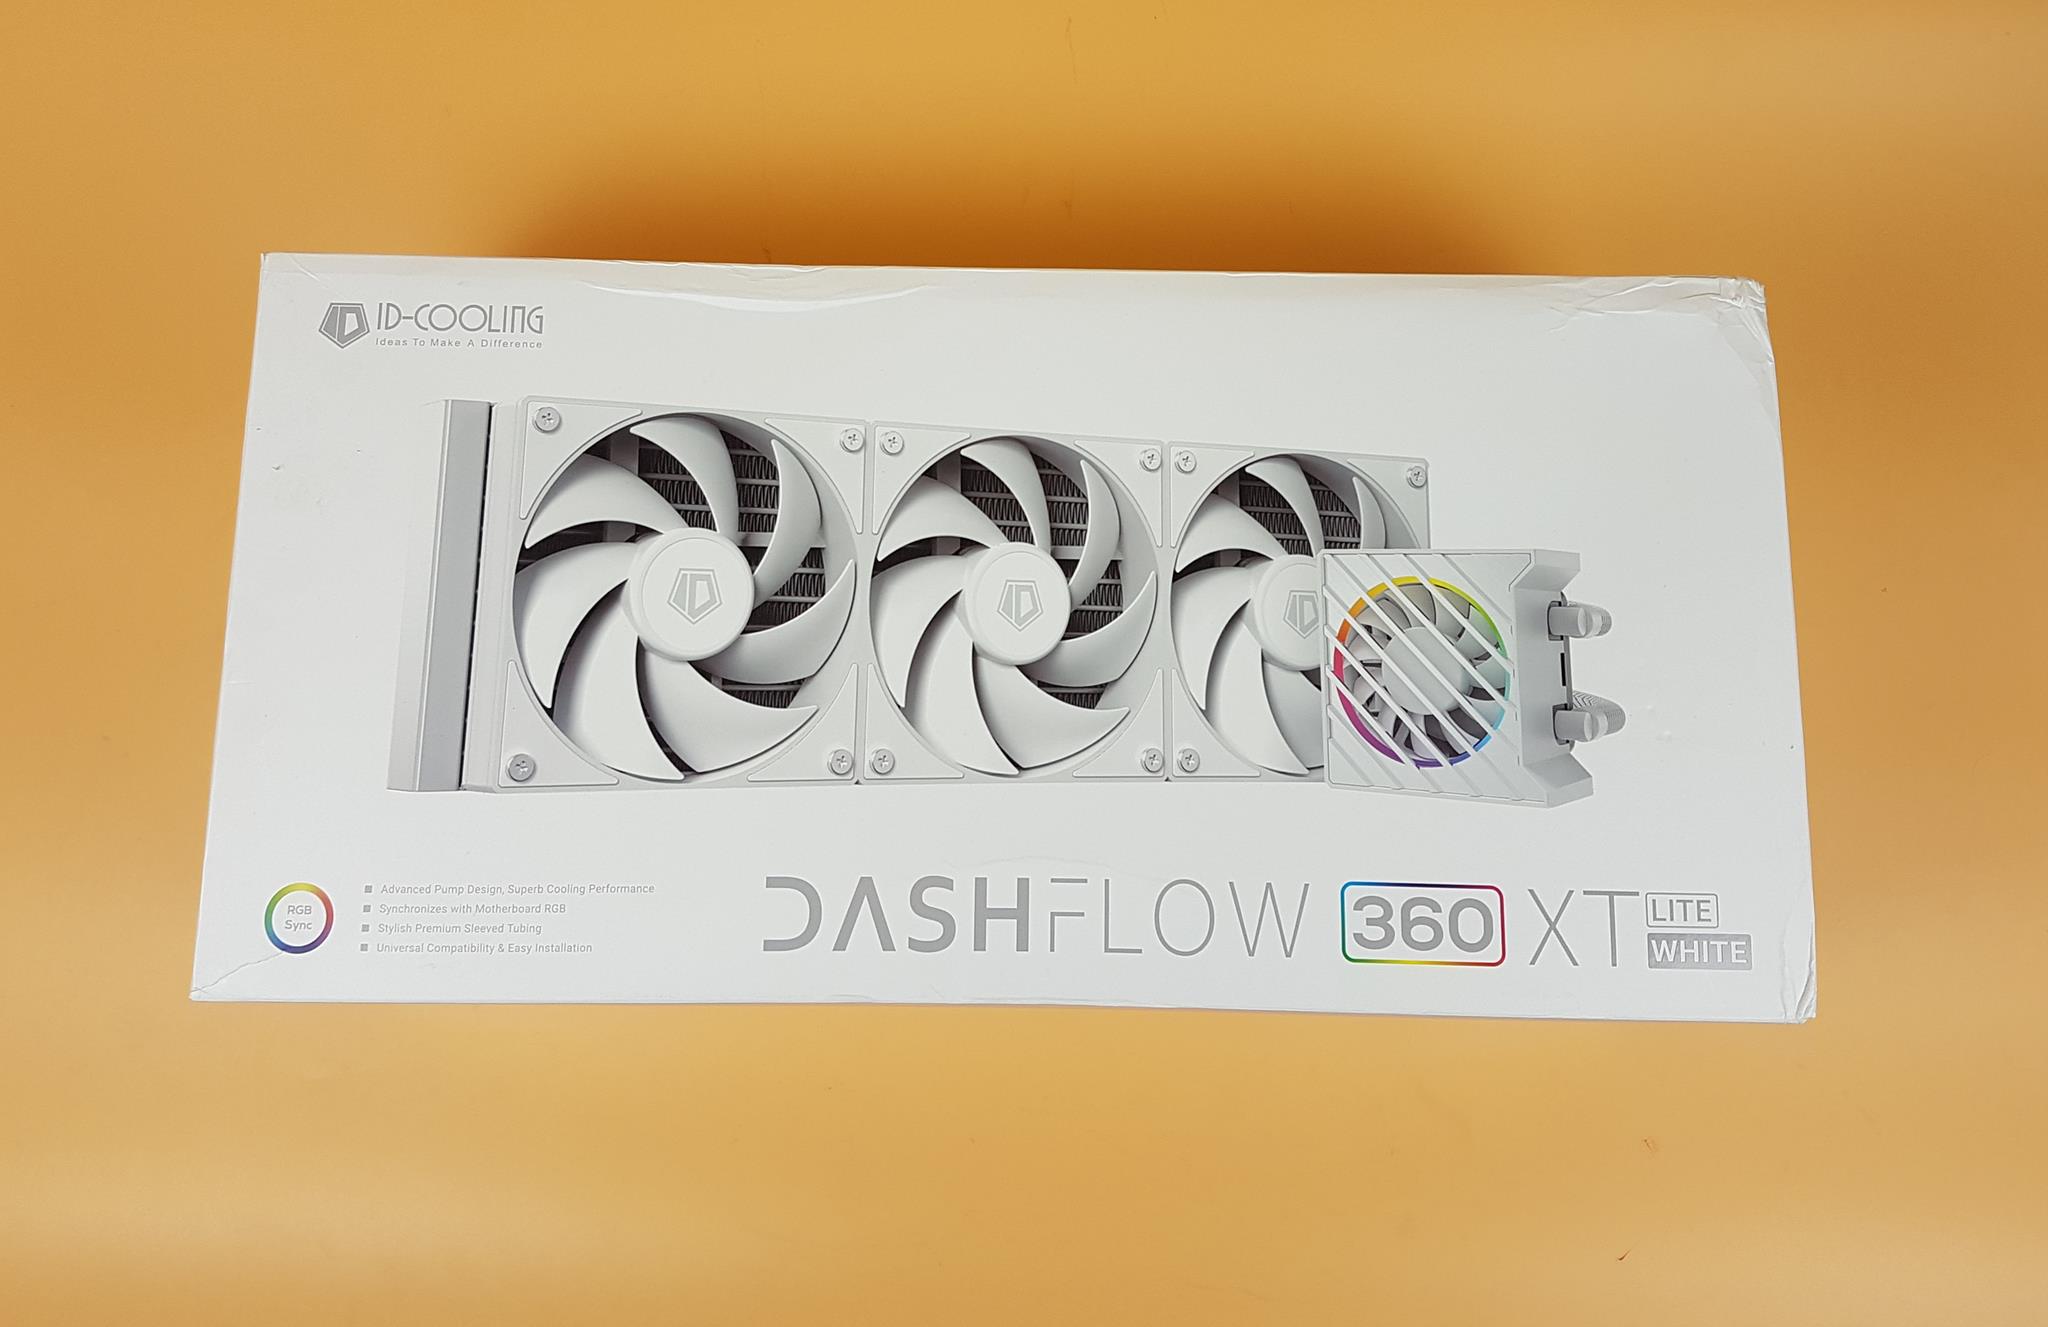 ID-COOLING DASHFLOW 360 XT LITE WHITE packaging